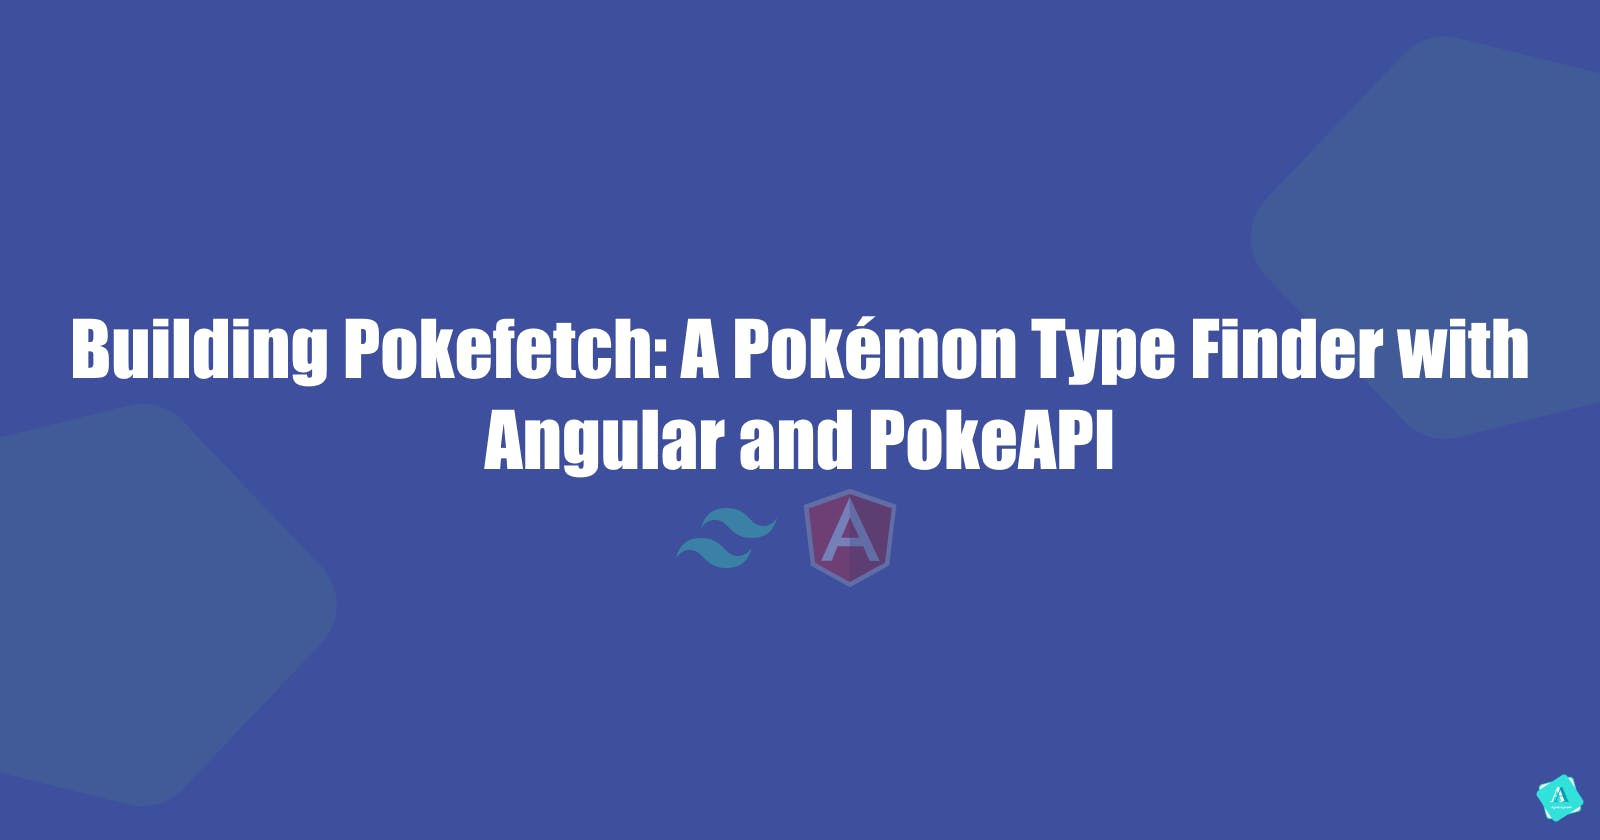 Building Pokefetch: A Pokémon Type Finder with Angular and PokeAPI